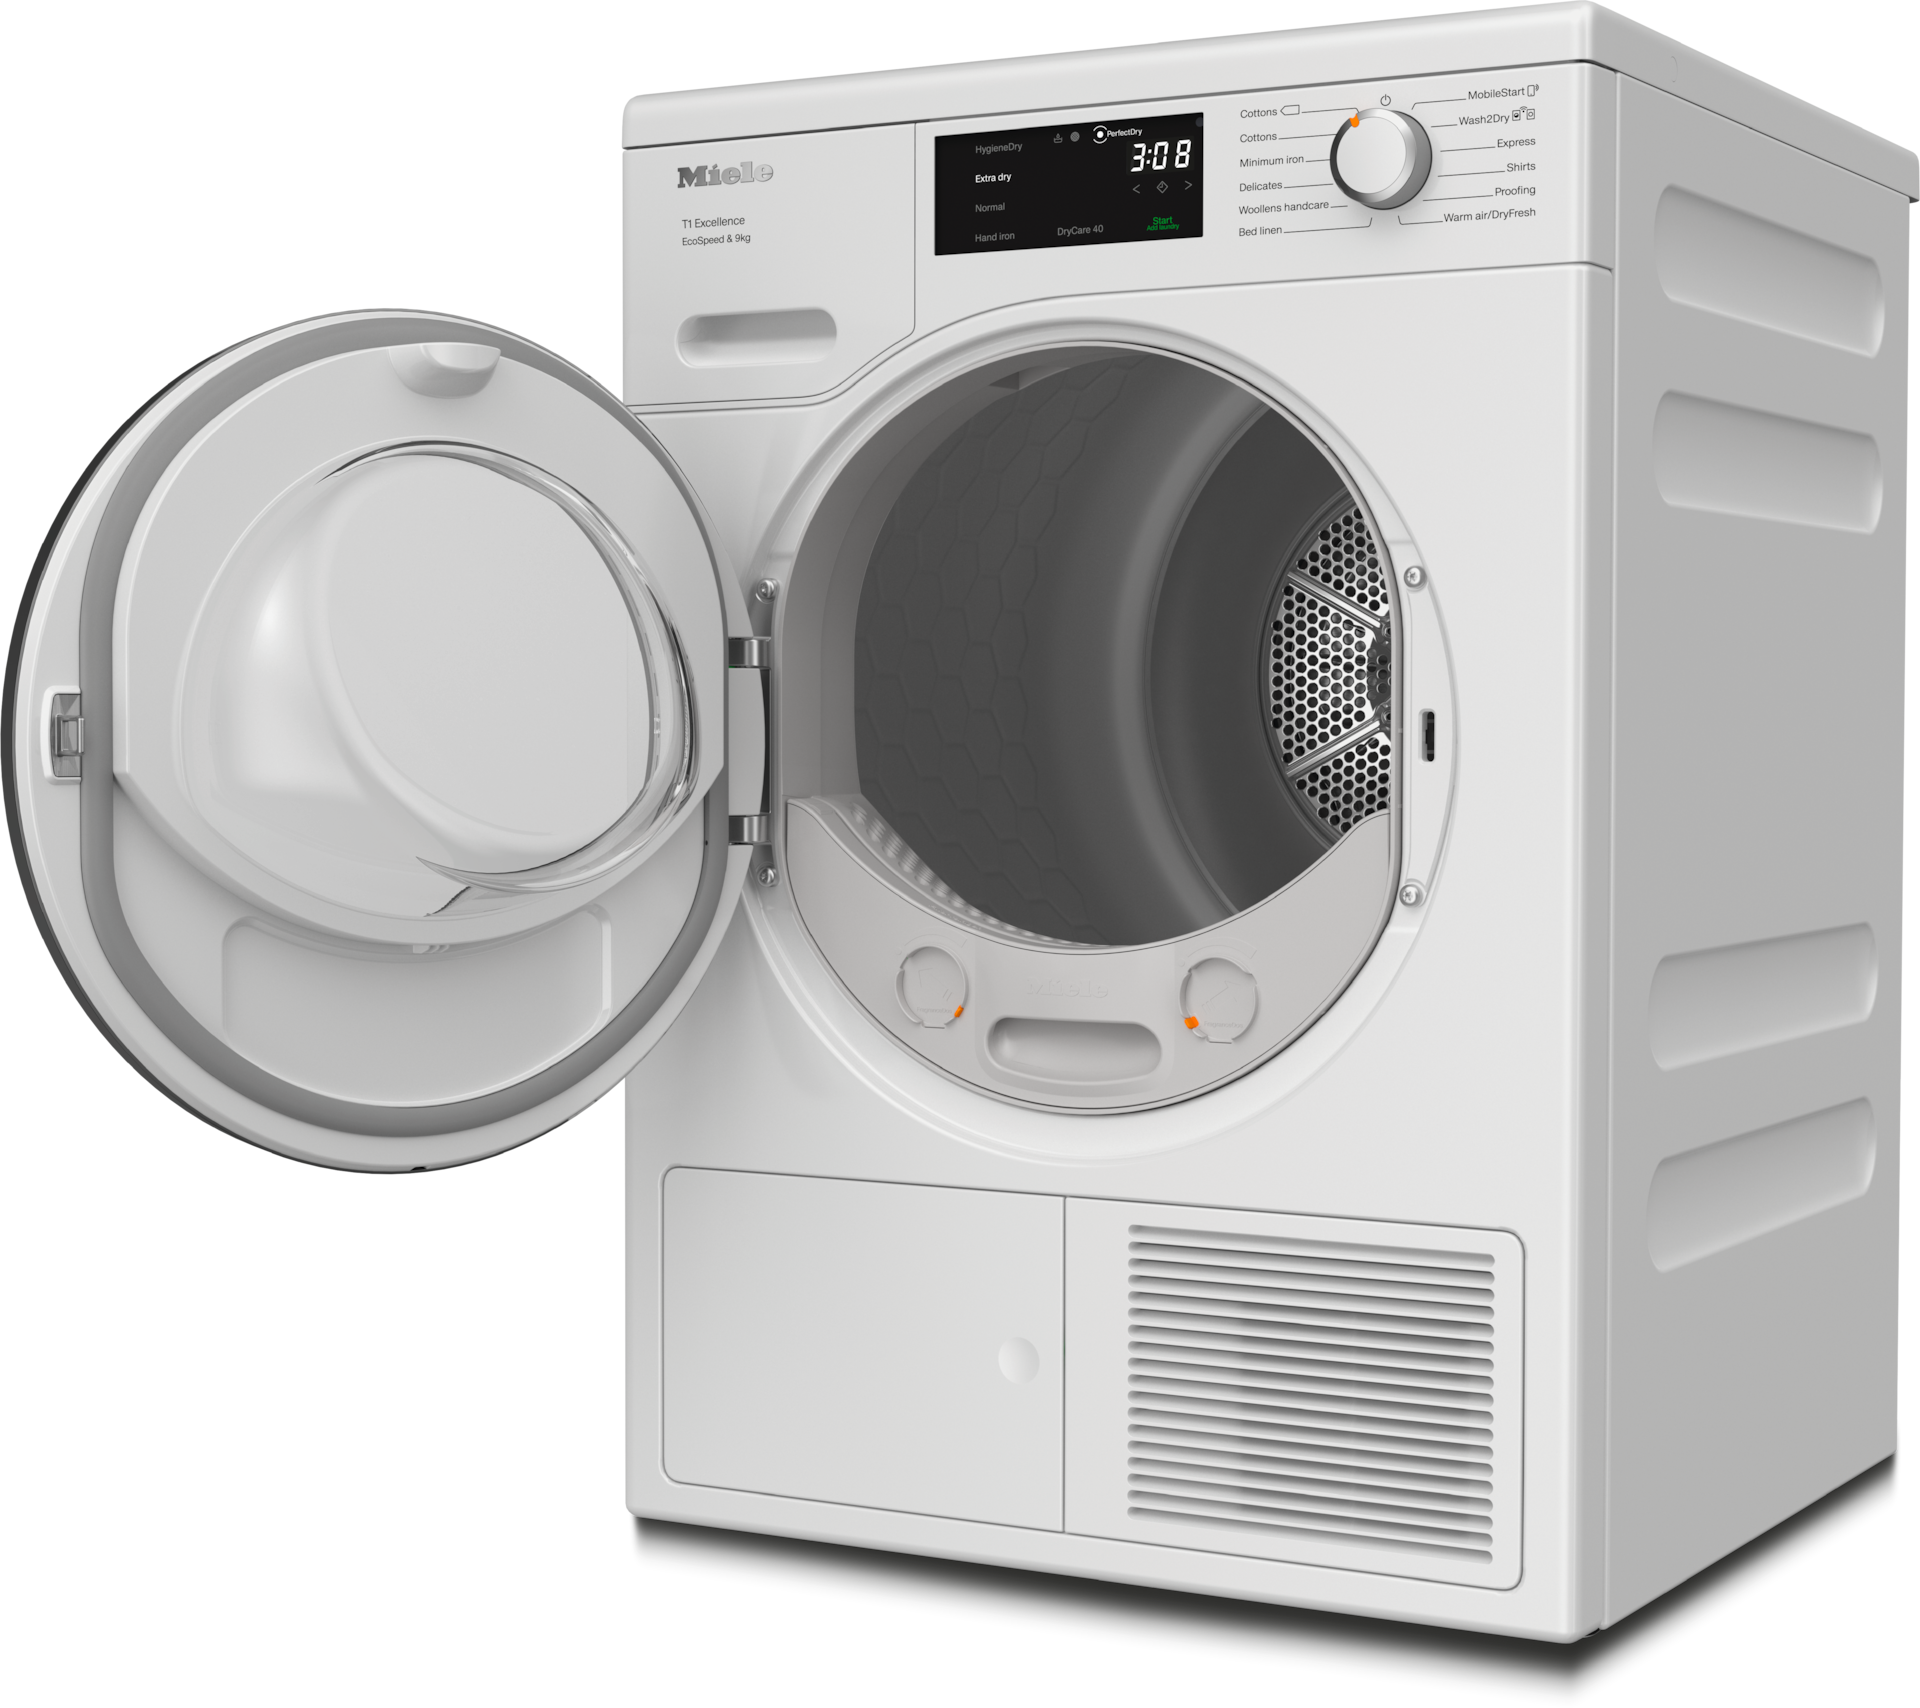 Tumble dryers - TEH785WP EcoSpeed&9kg Lotus white - 2